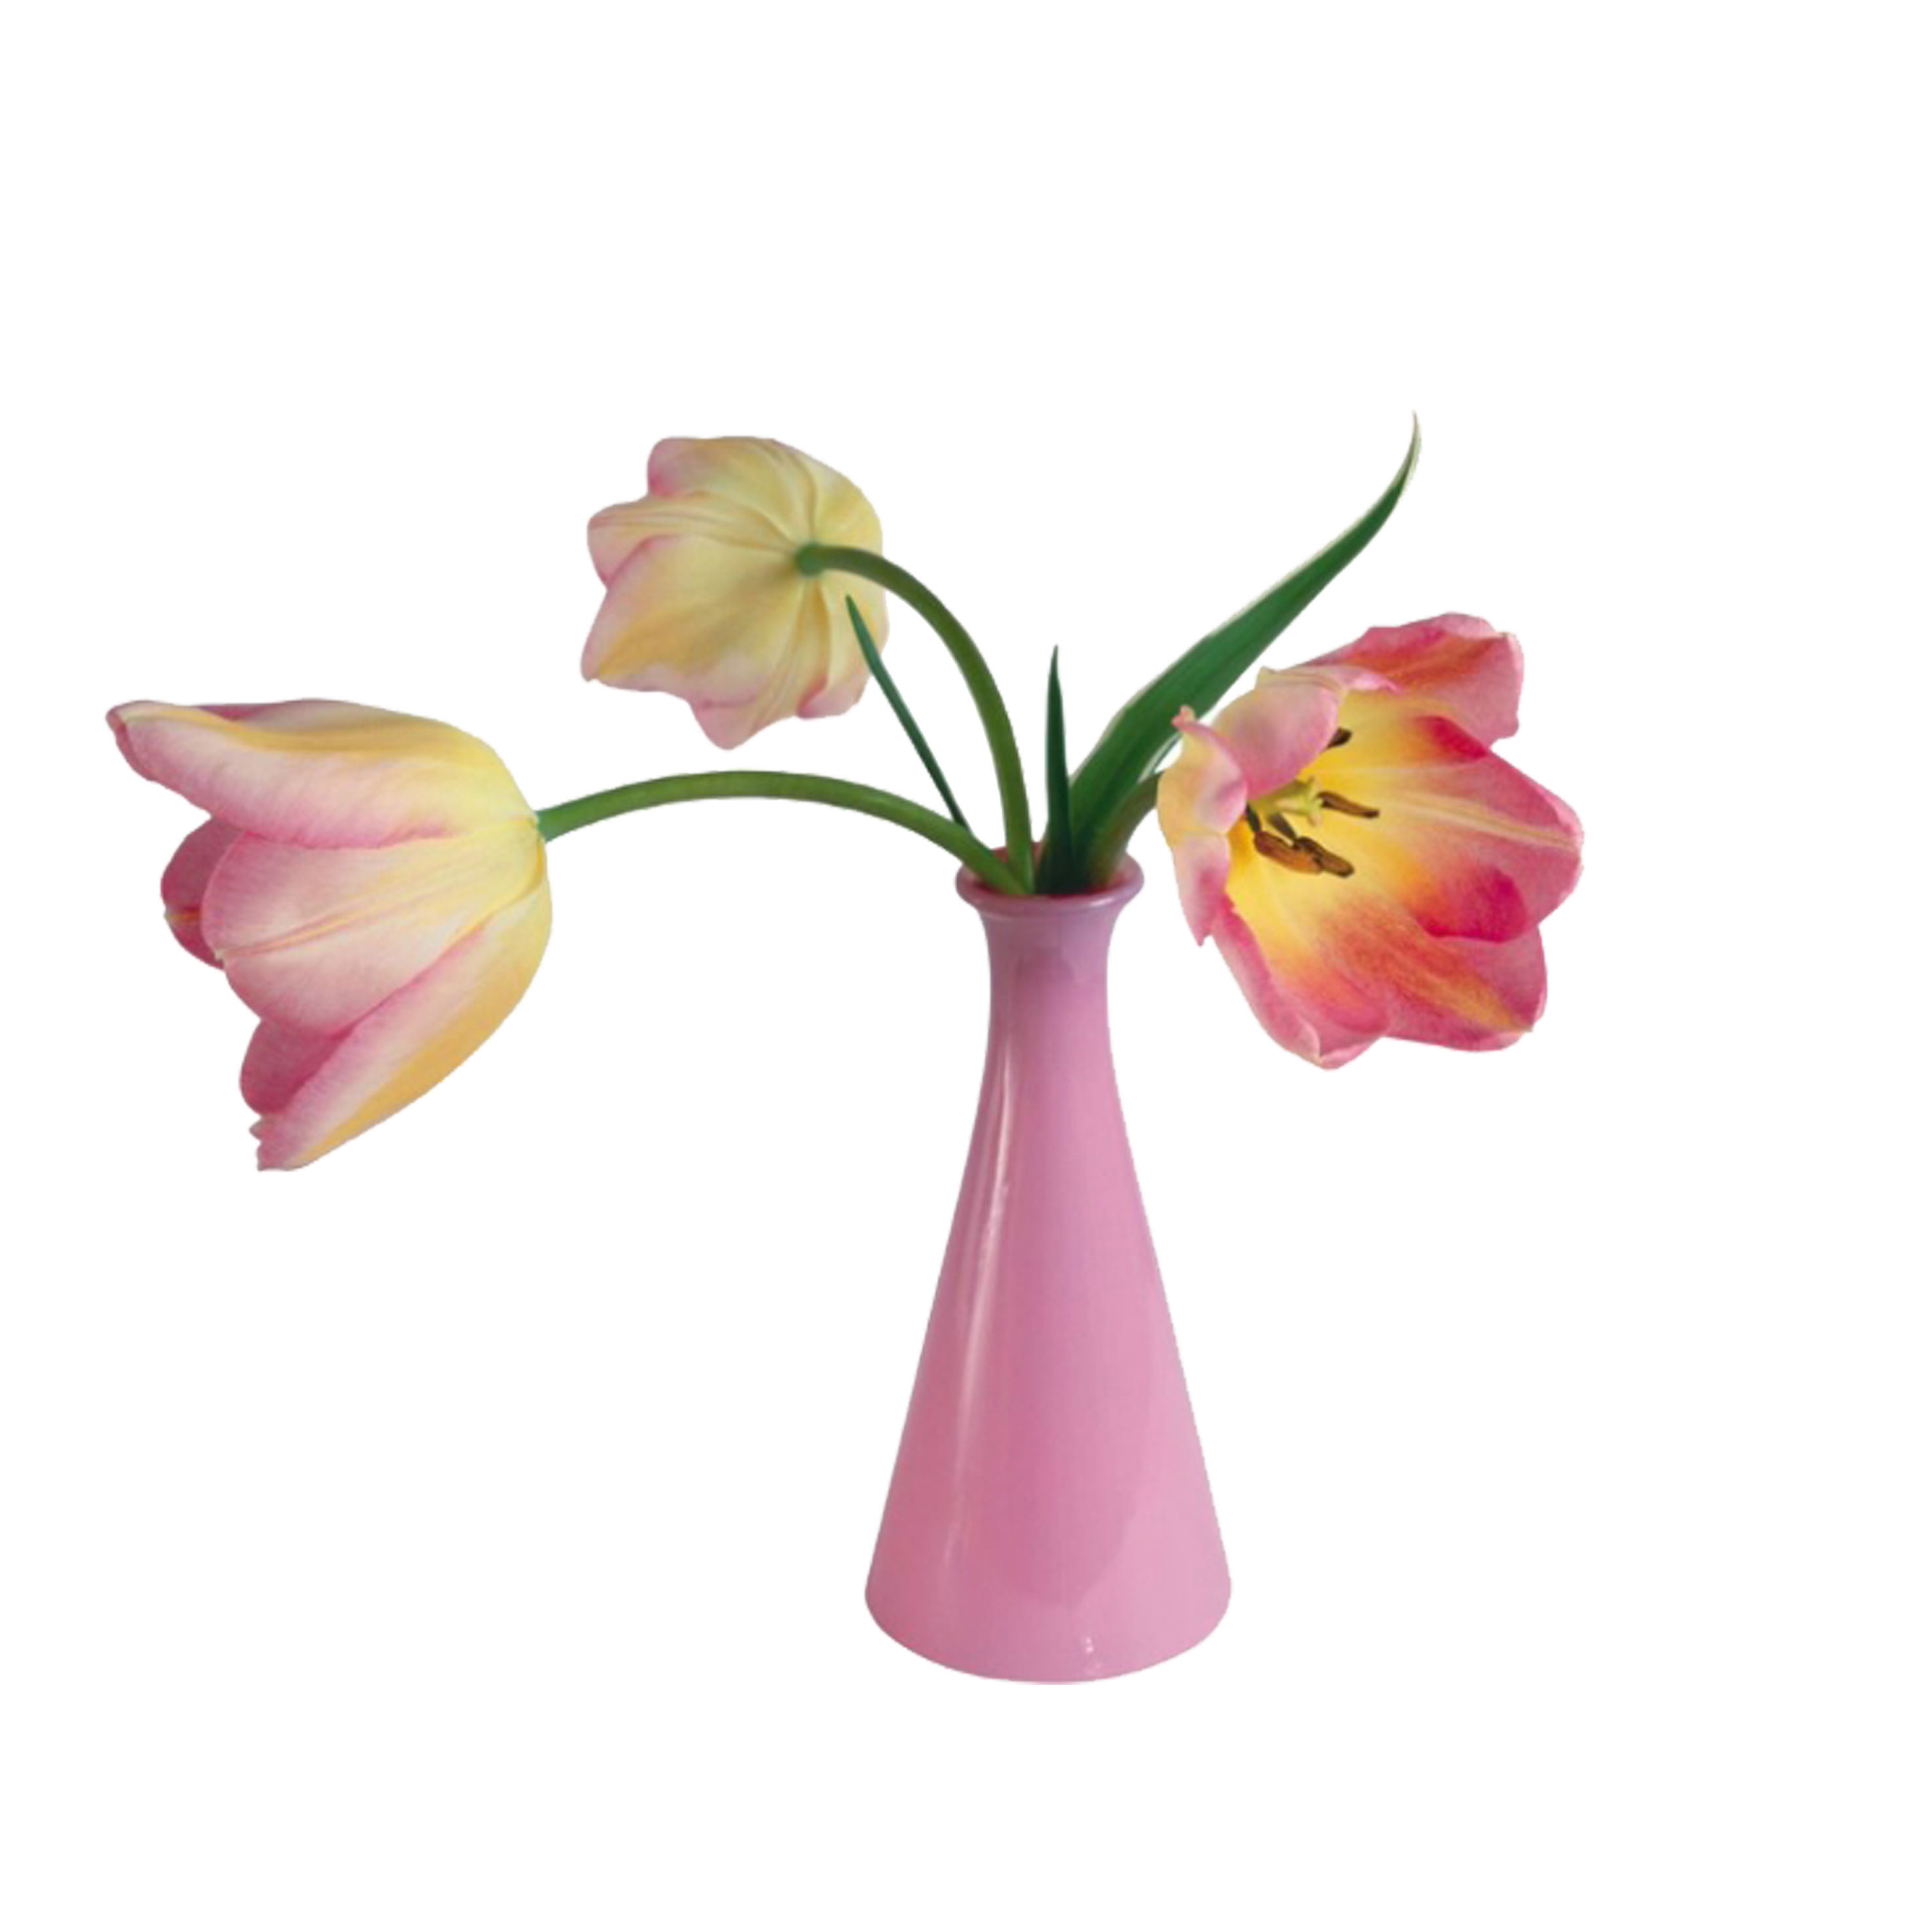 flowers clipart vase